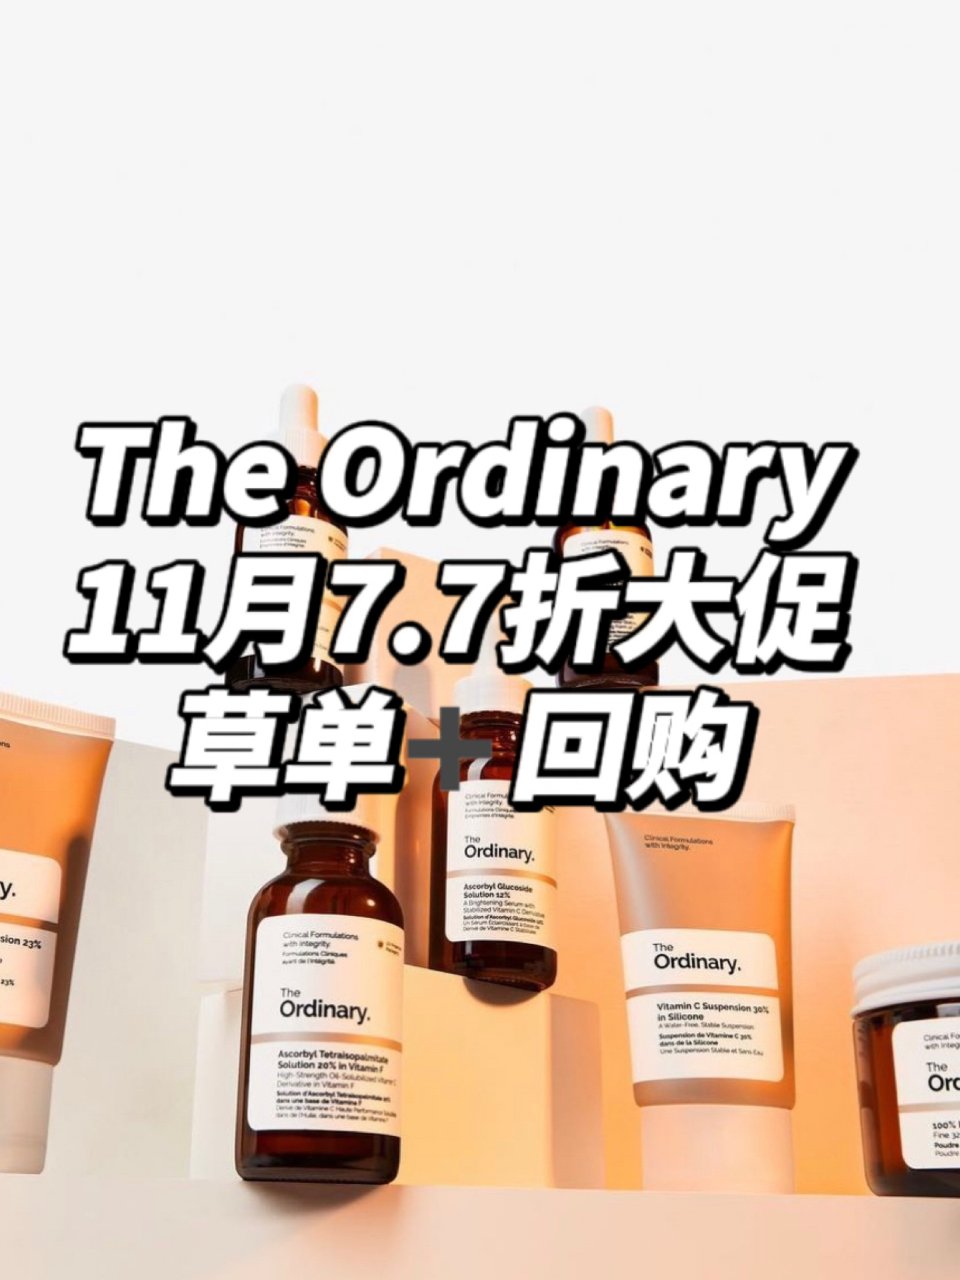 The Ordinary 11月大促 草...